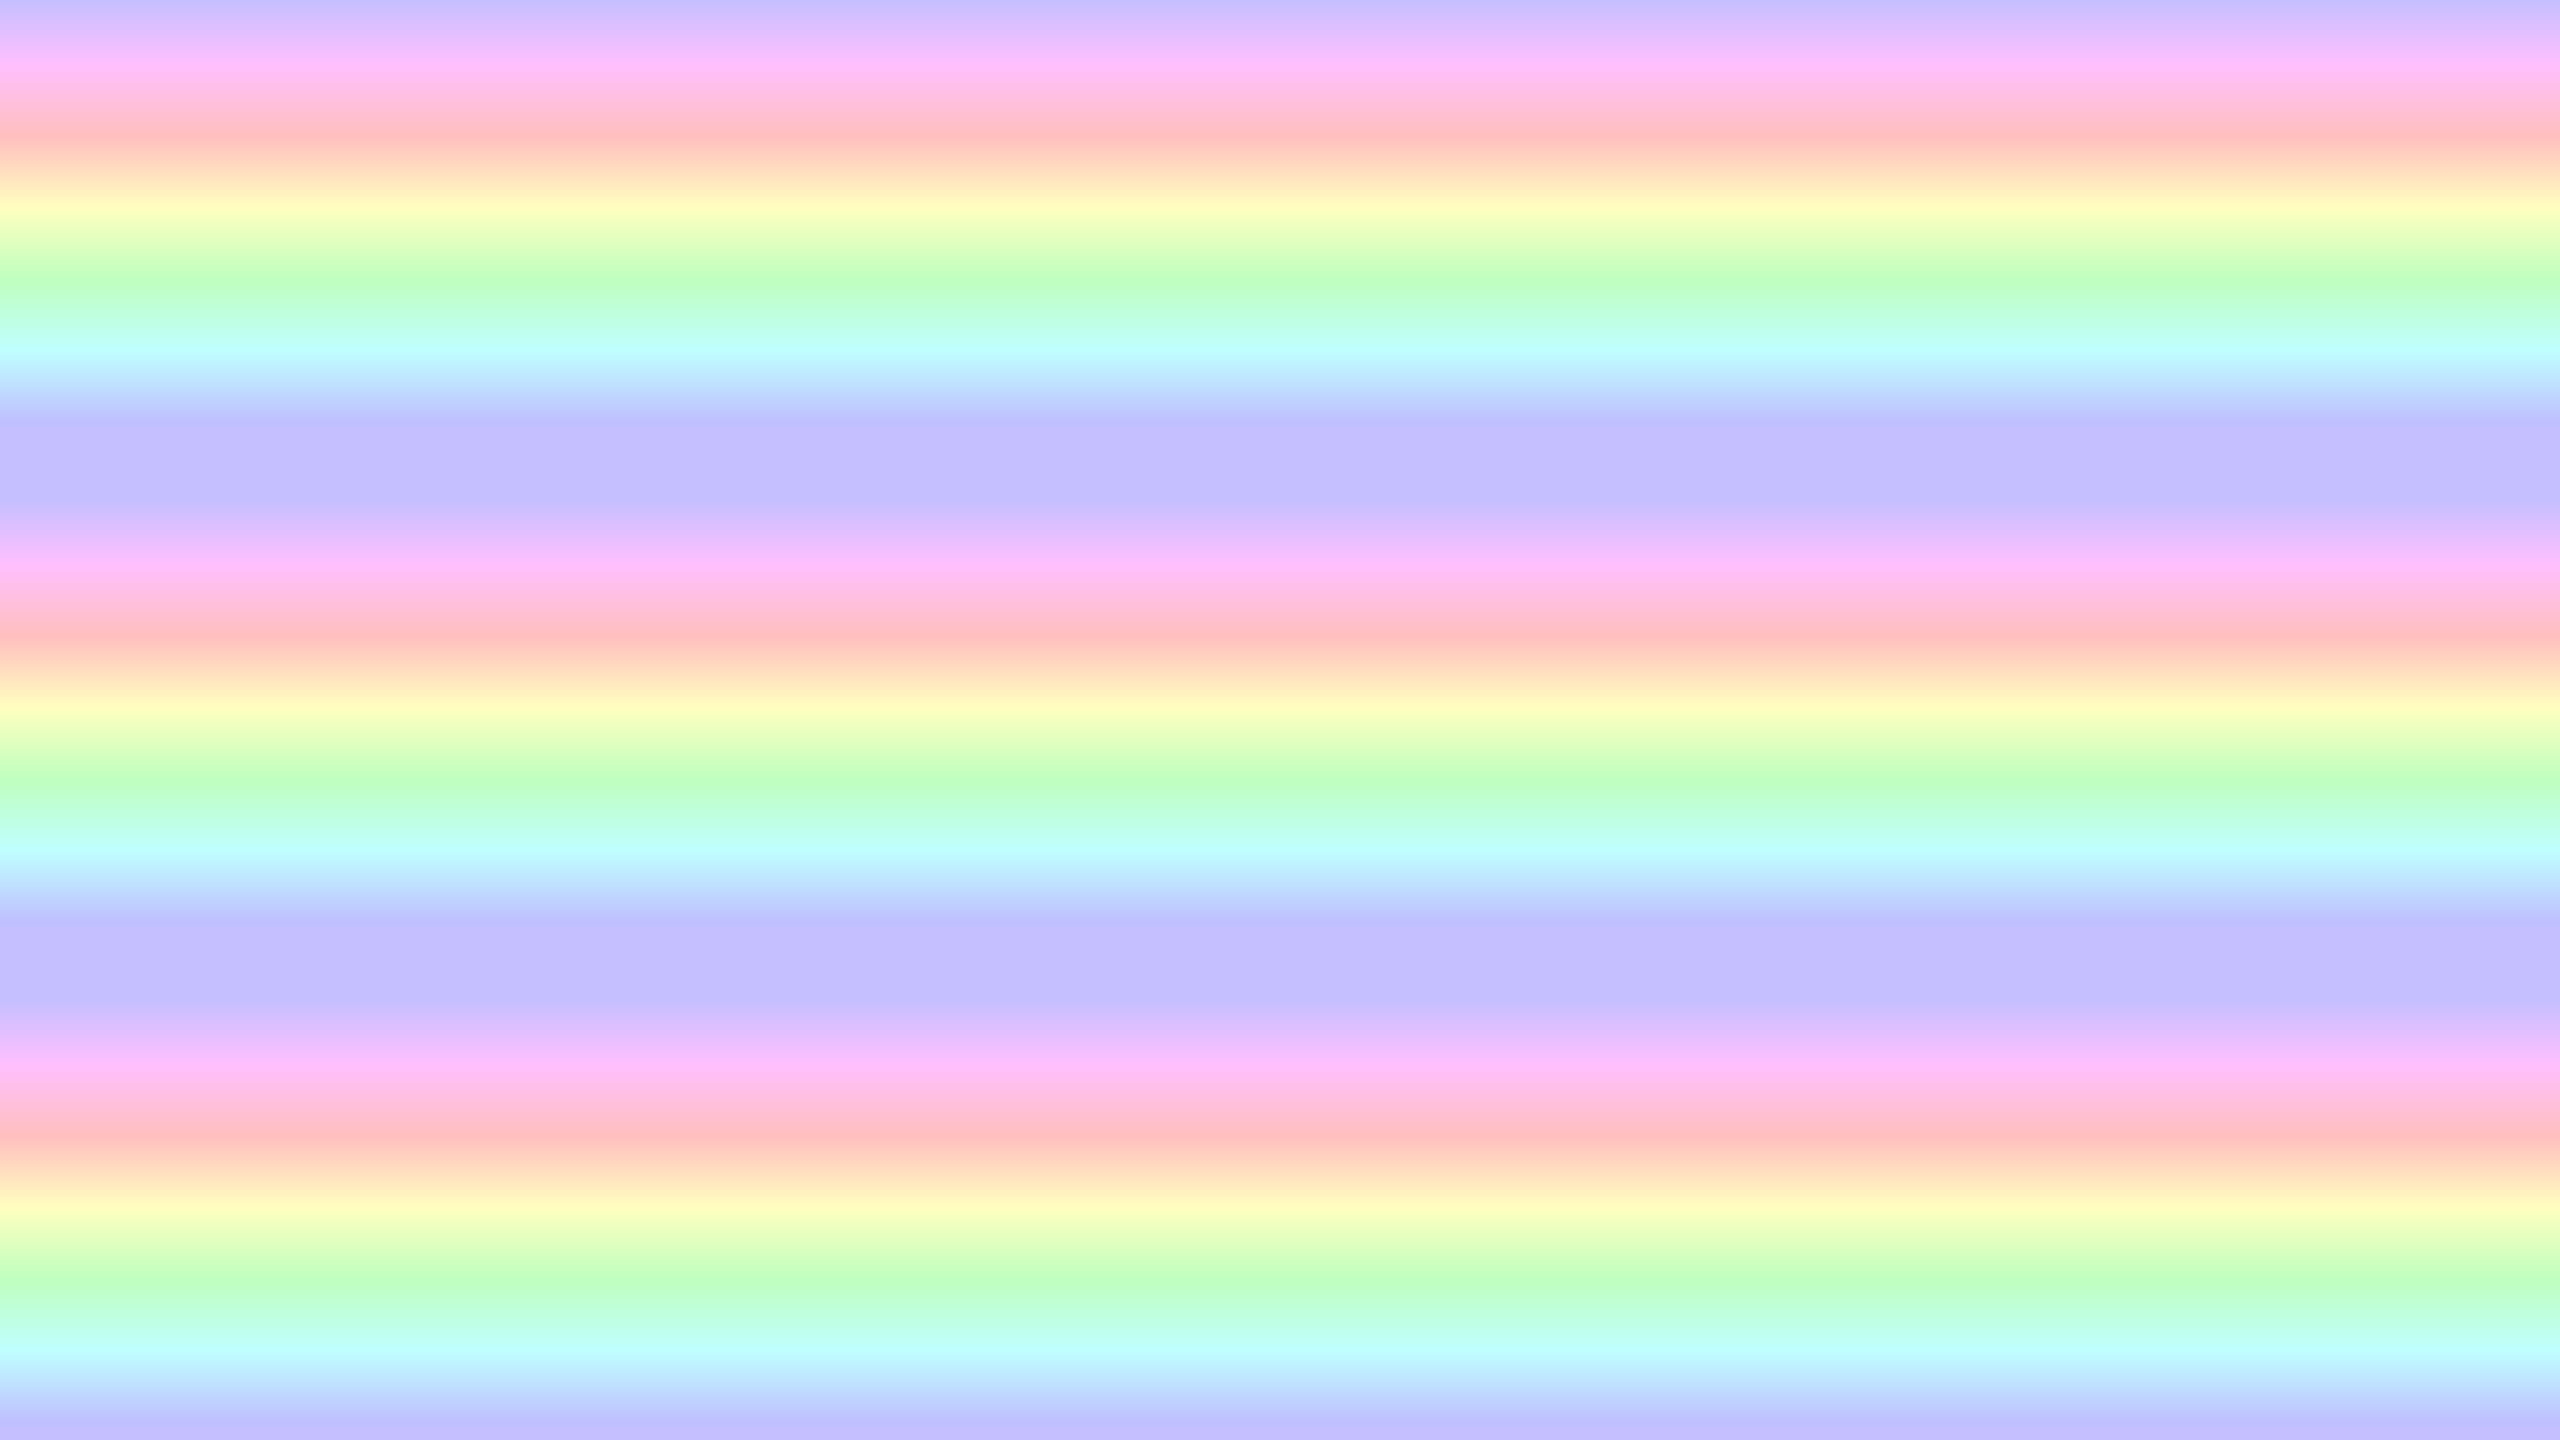 Aesthetic Rainbow Tumblr Desktop Wallpapers - Top Free Aesthetic ...